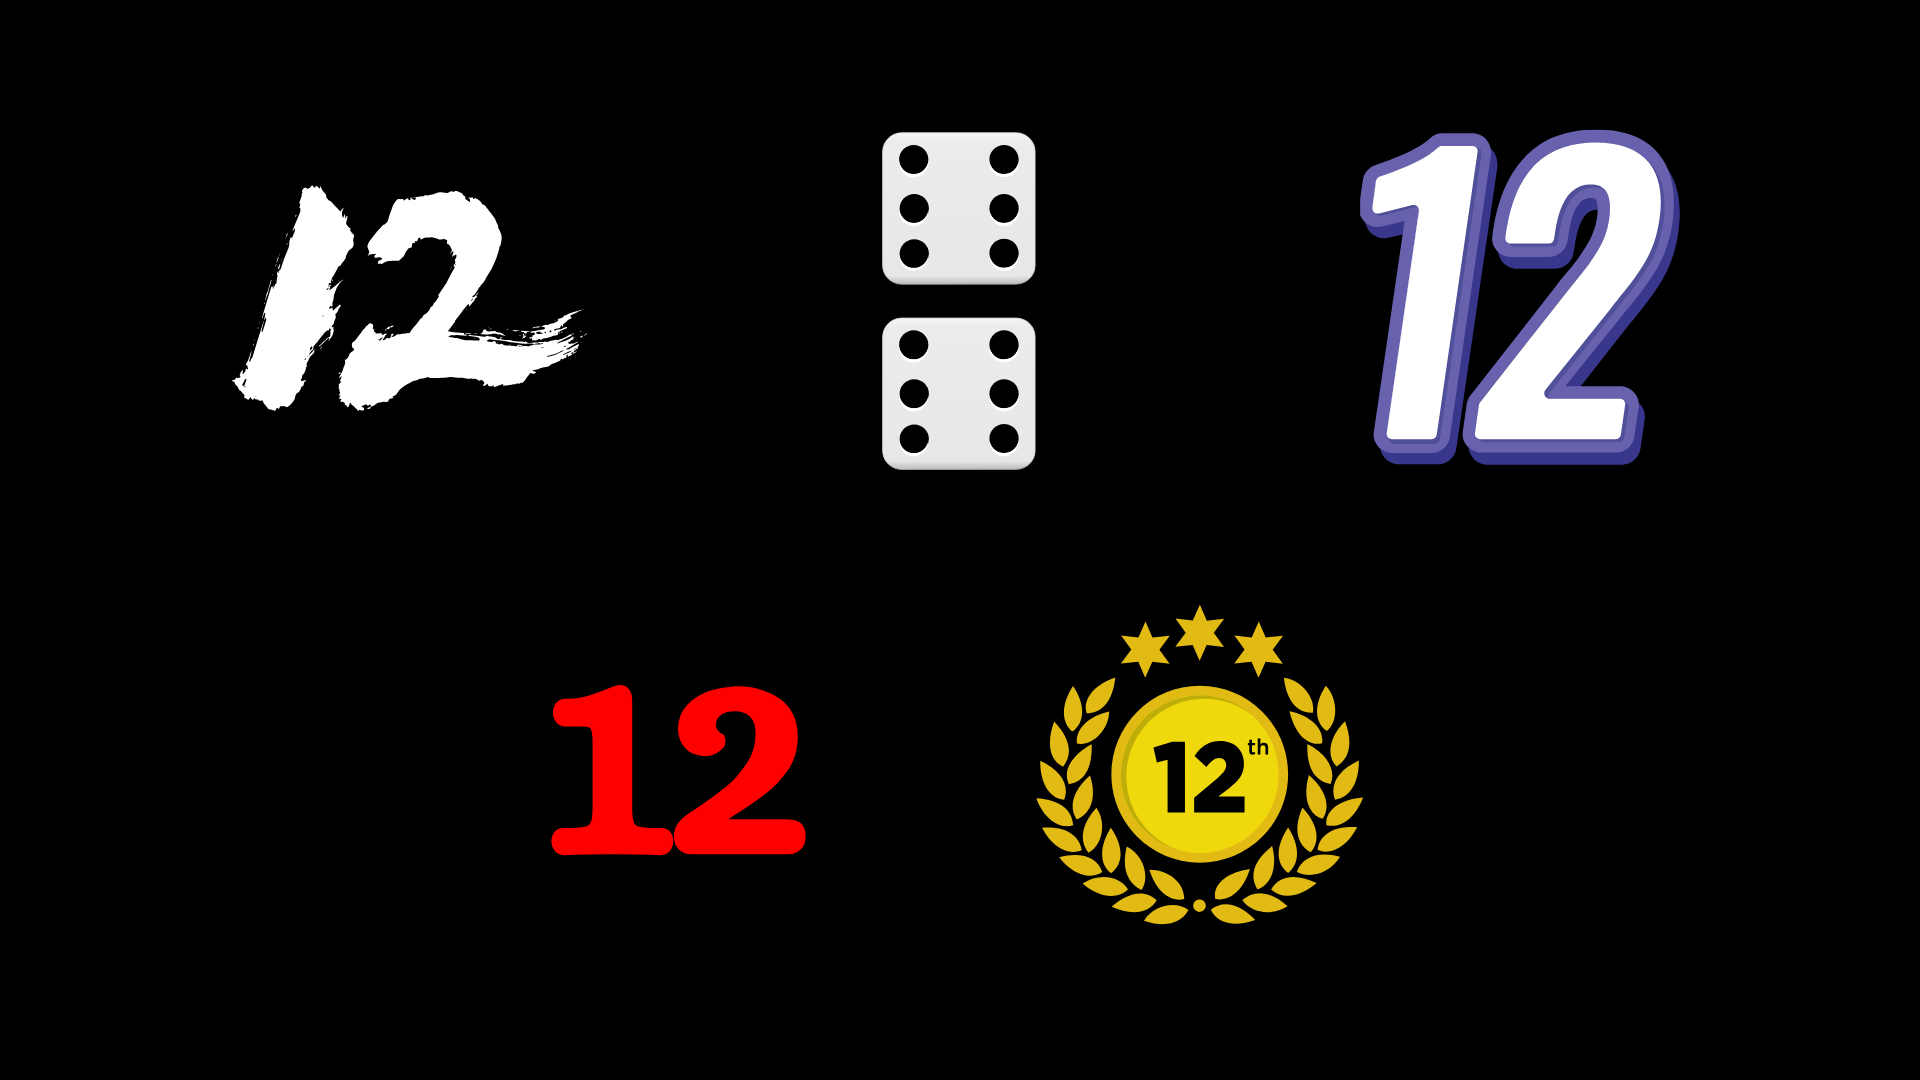 Symbols for 12